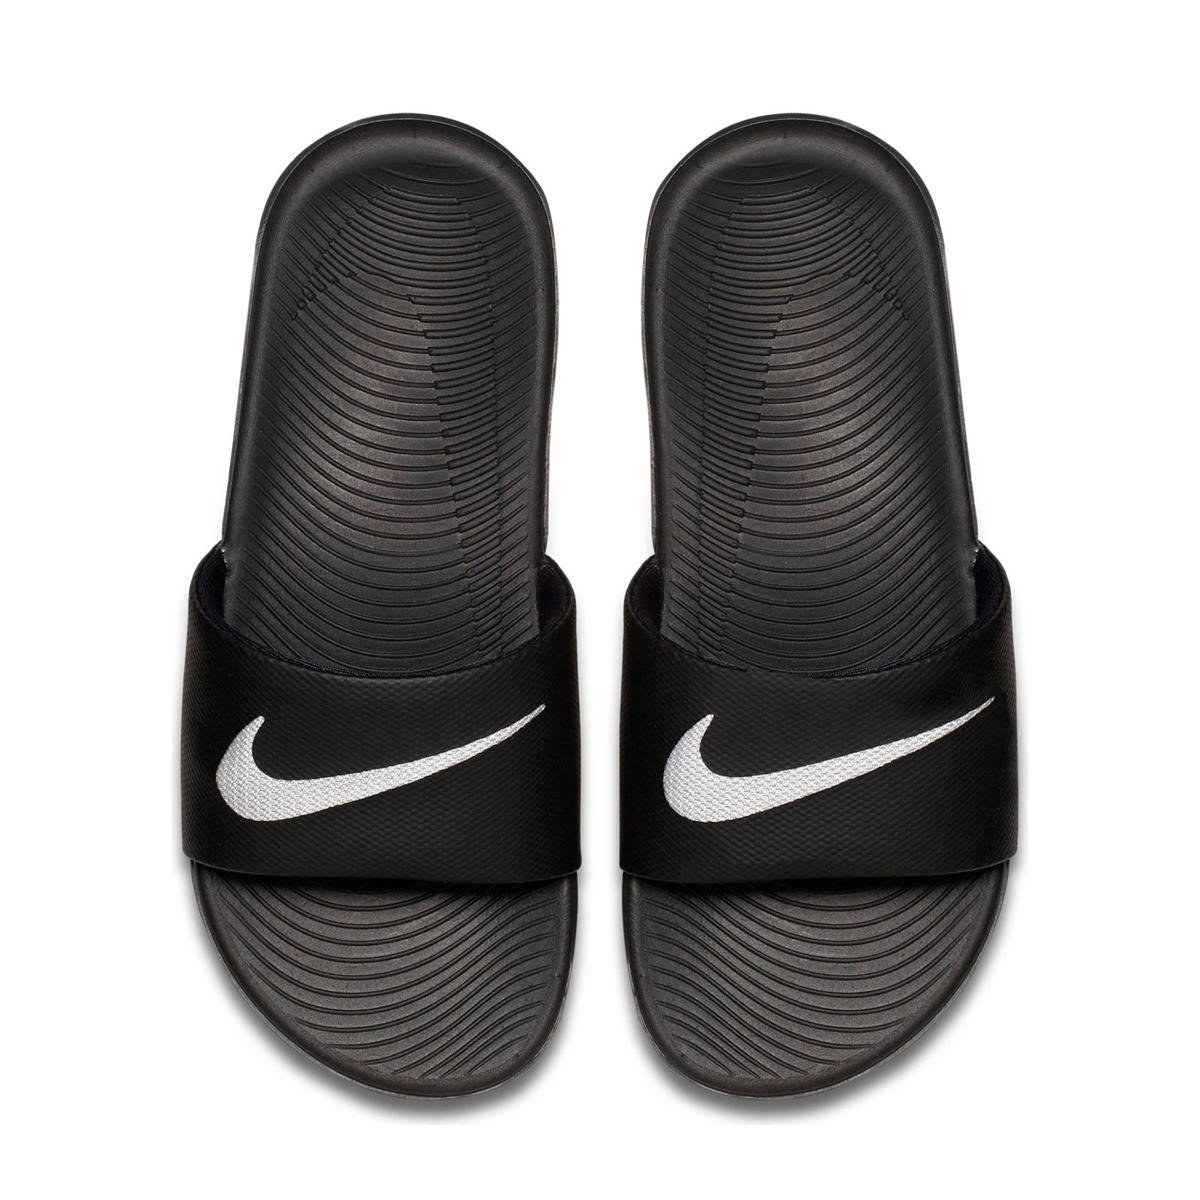 magnifiek Ingrijpen vingerafdruk Nike Kawa Slide badslippers zwart/wit | wehkamp